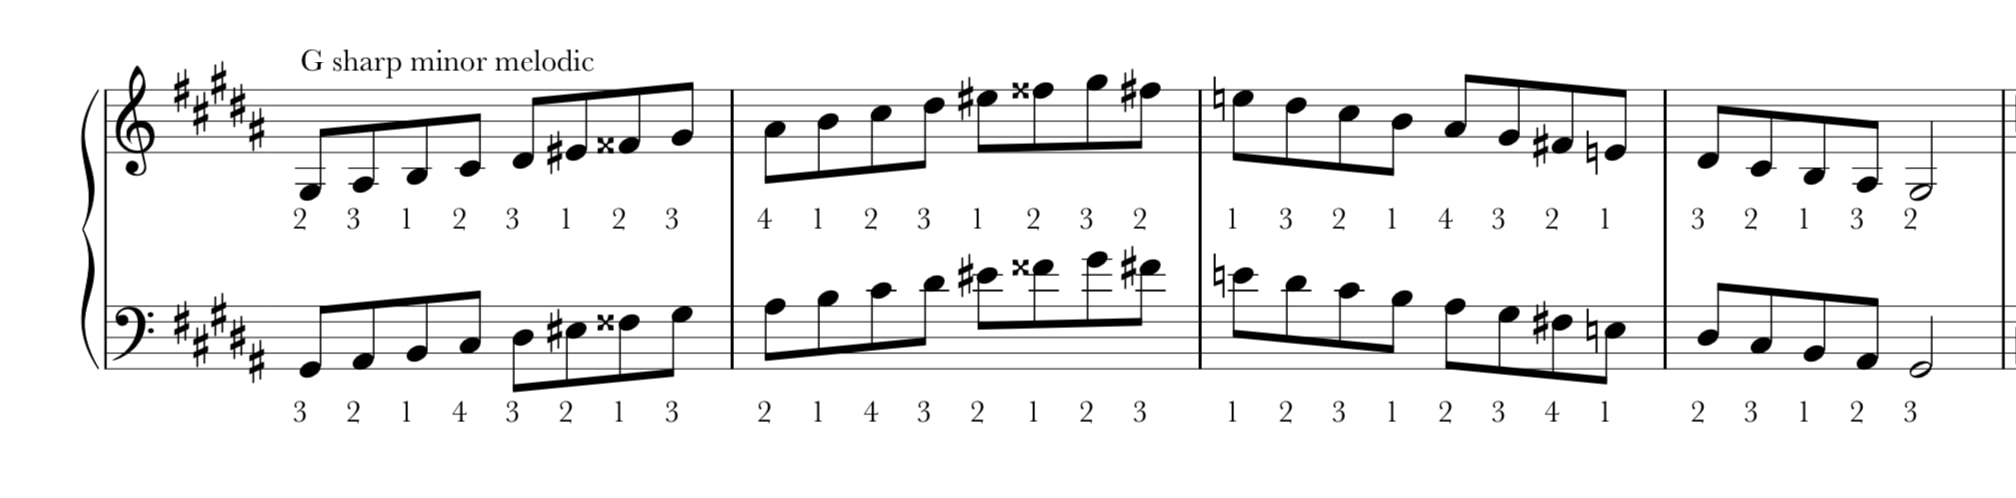 G sharp melodic minor scale